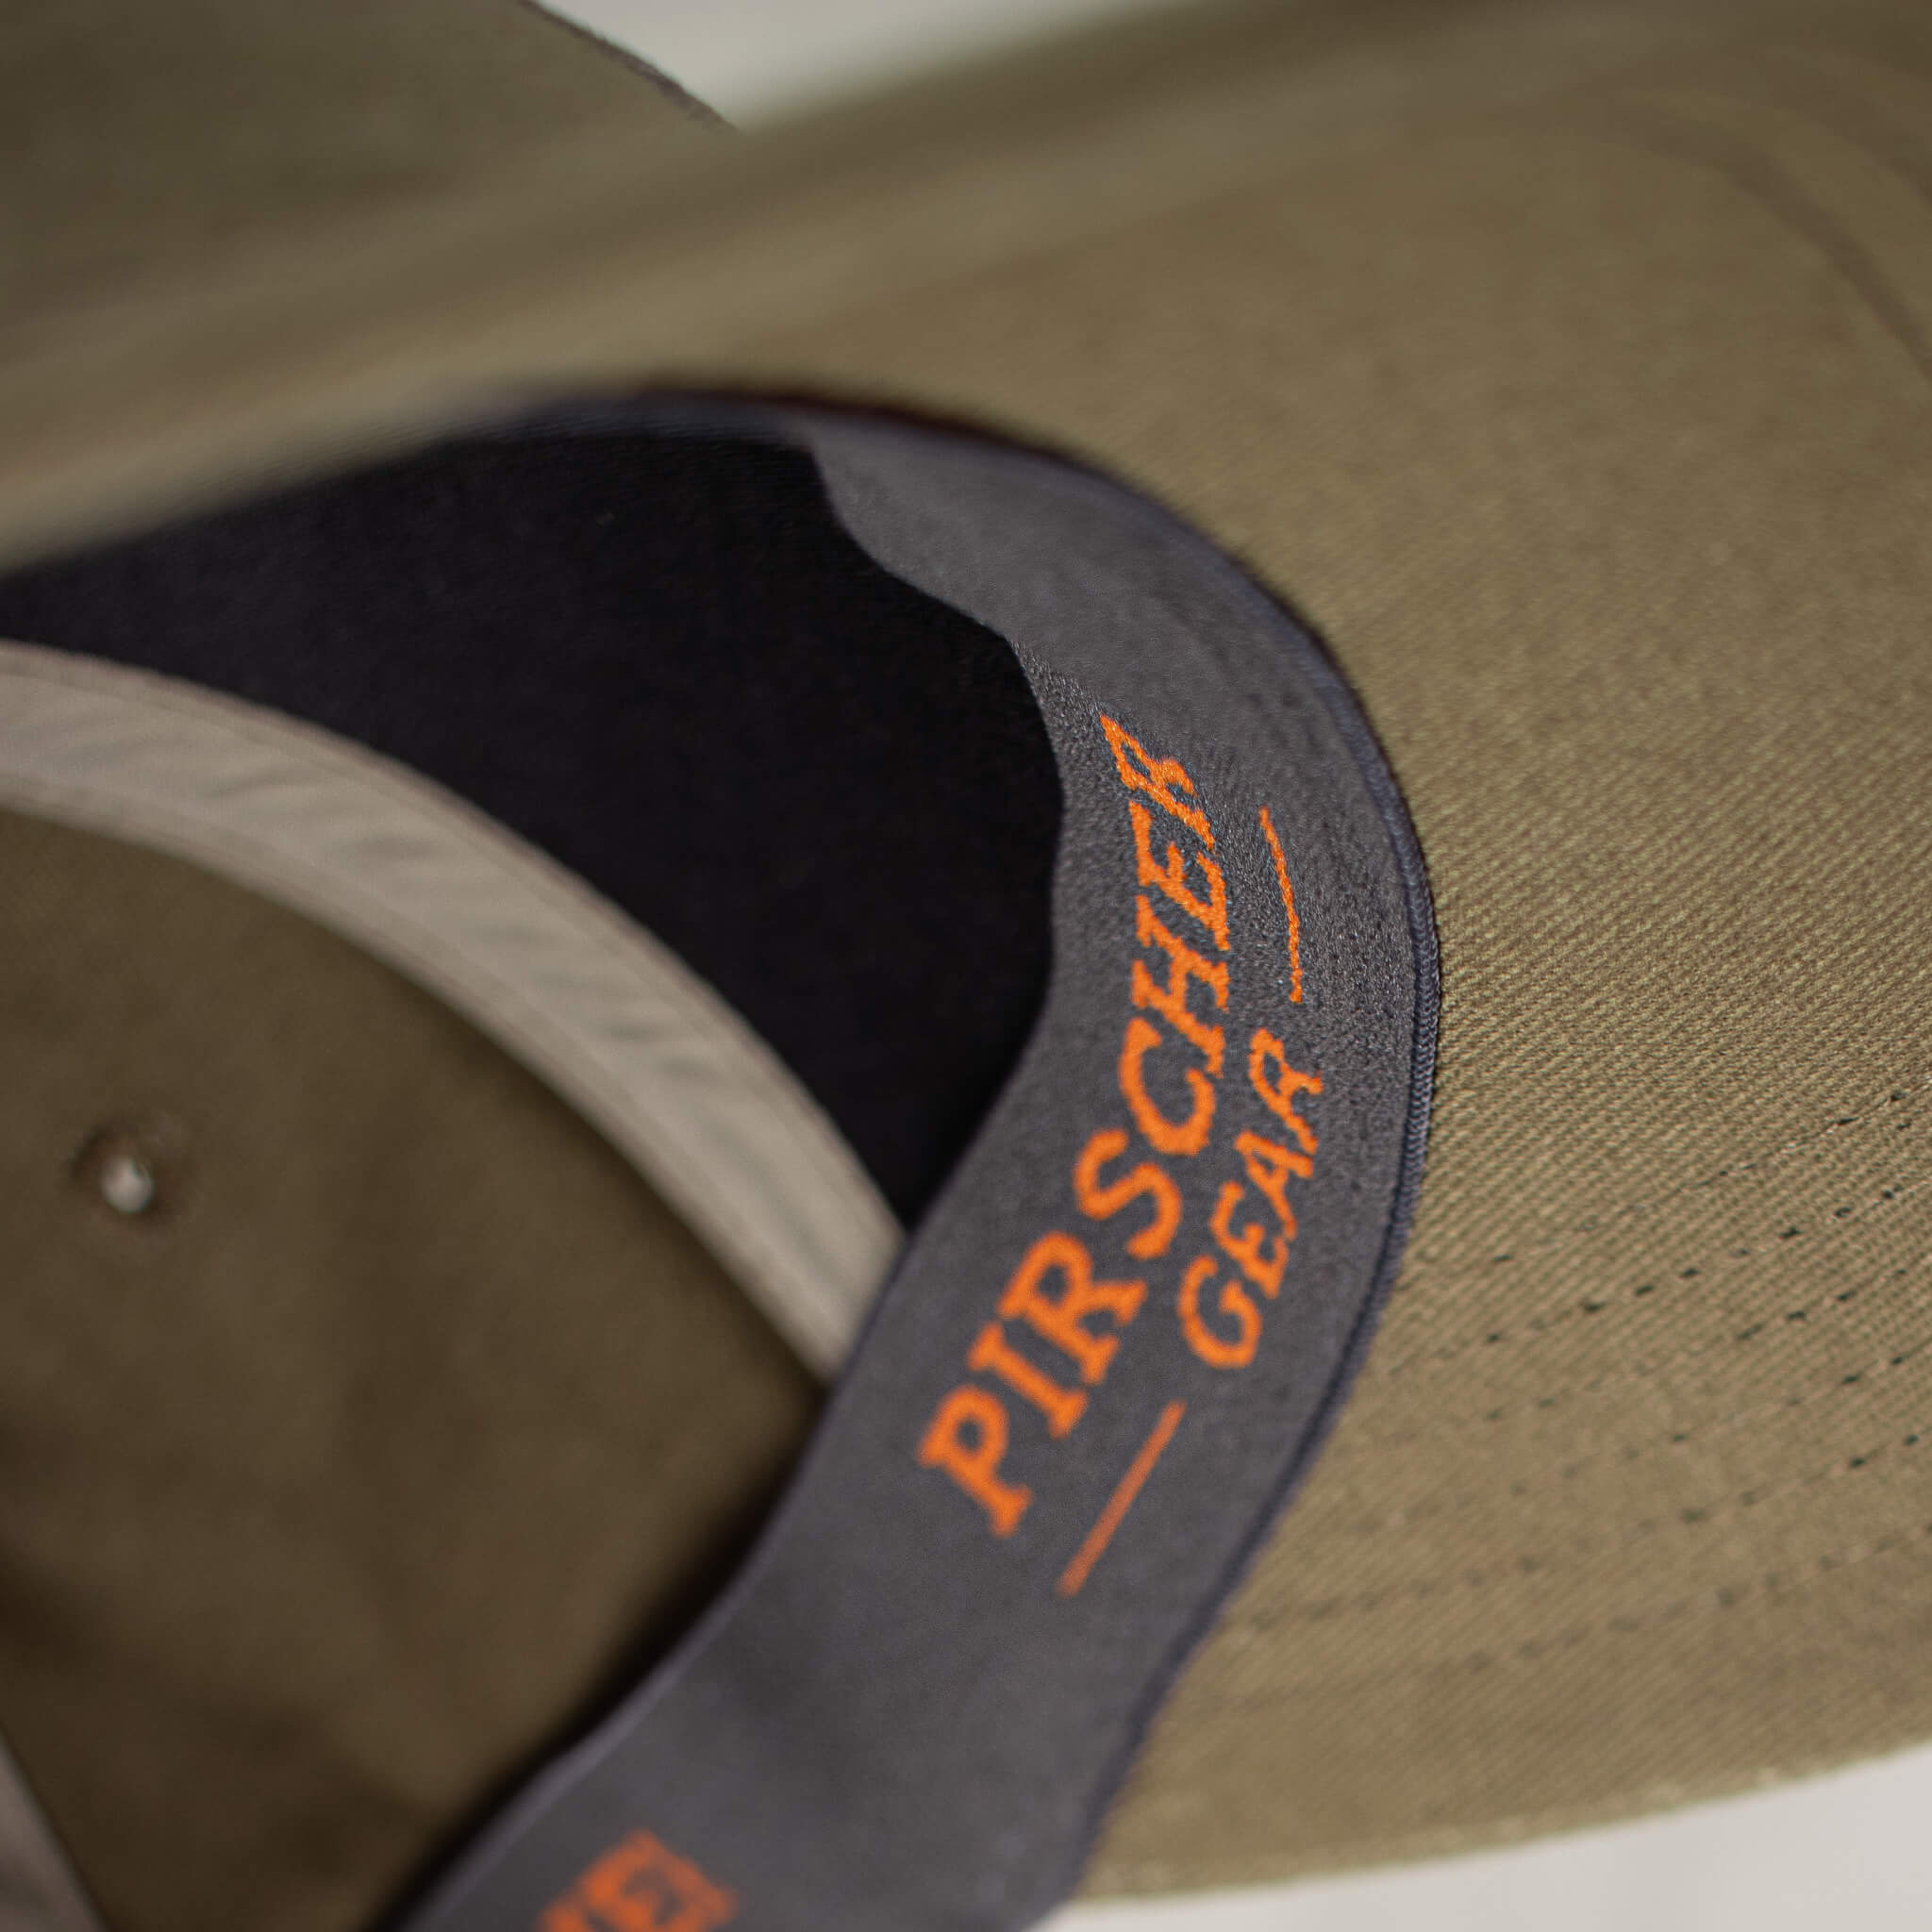 Pirscher Gear Flat-Brim cap (green)